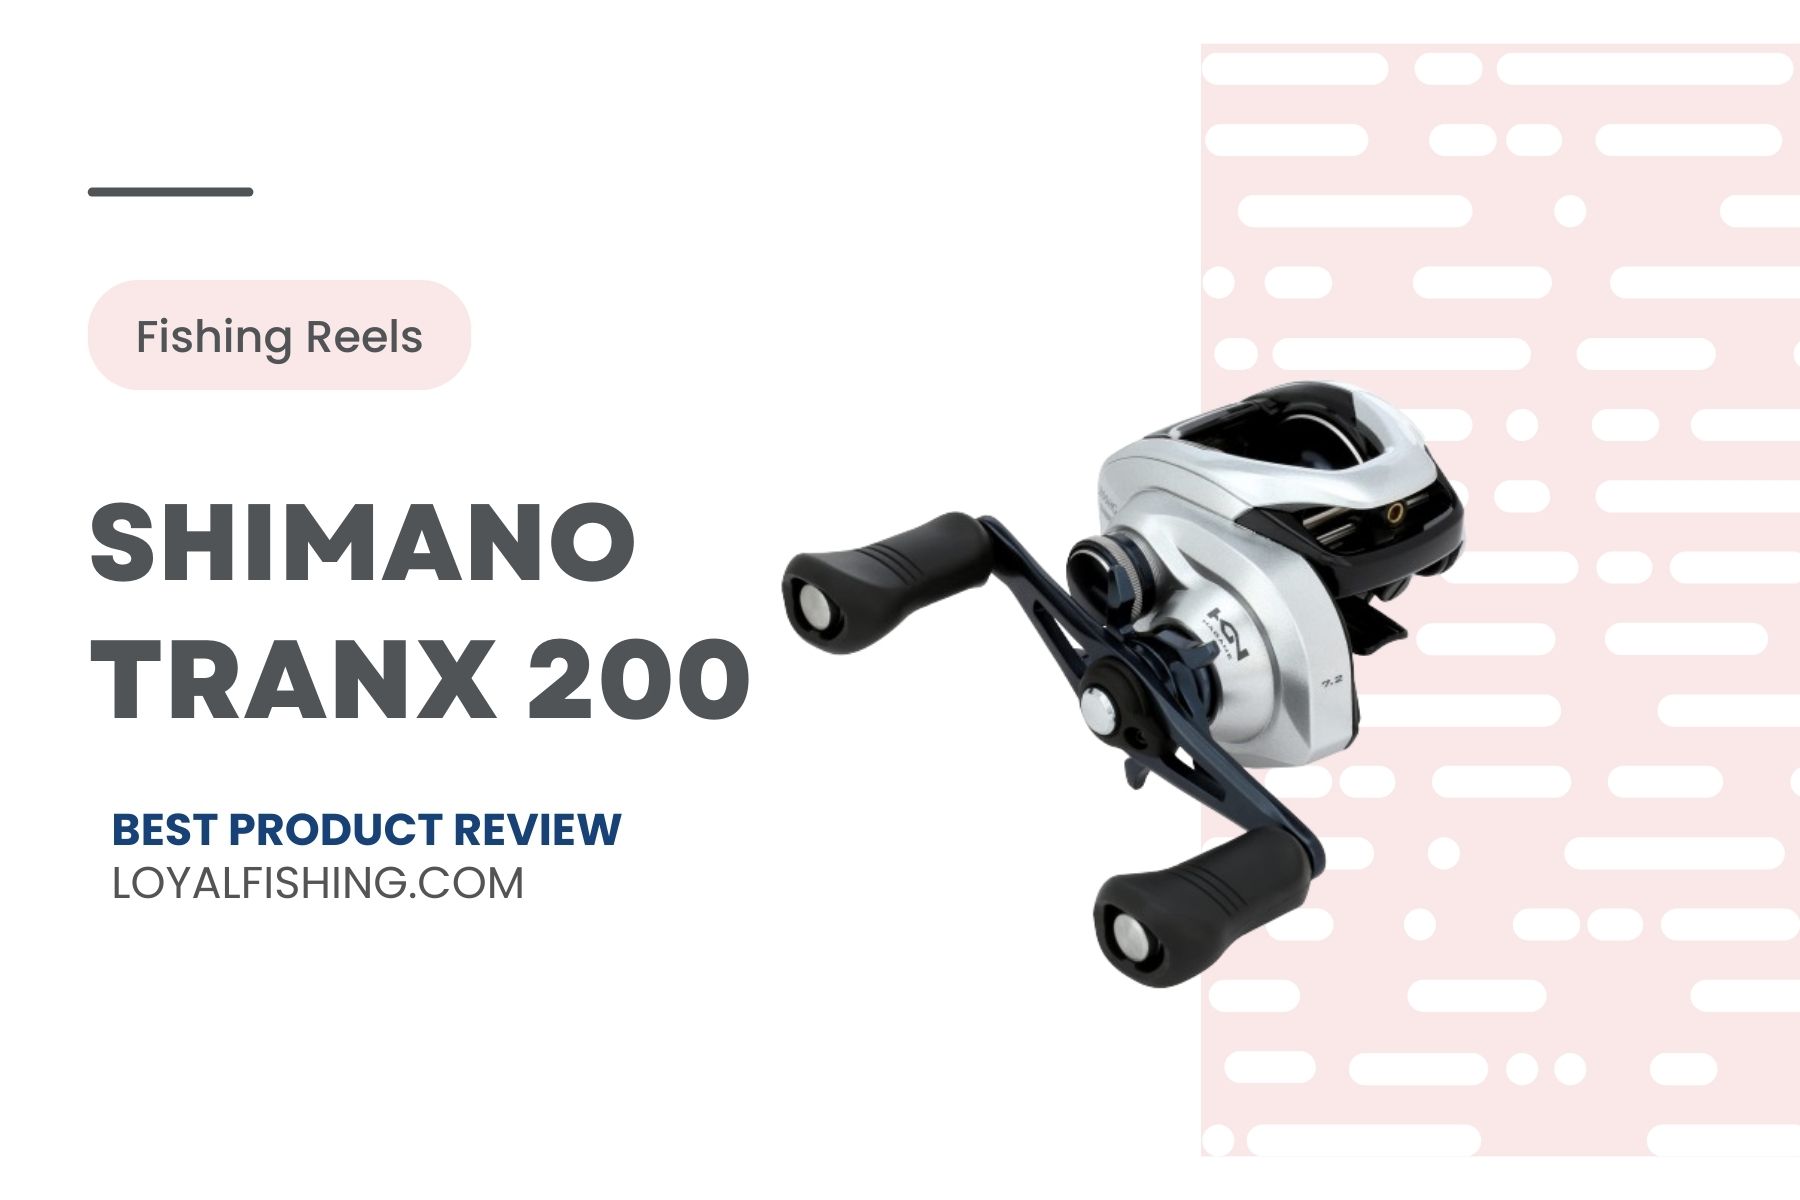 Shimano Tranx 200